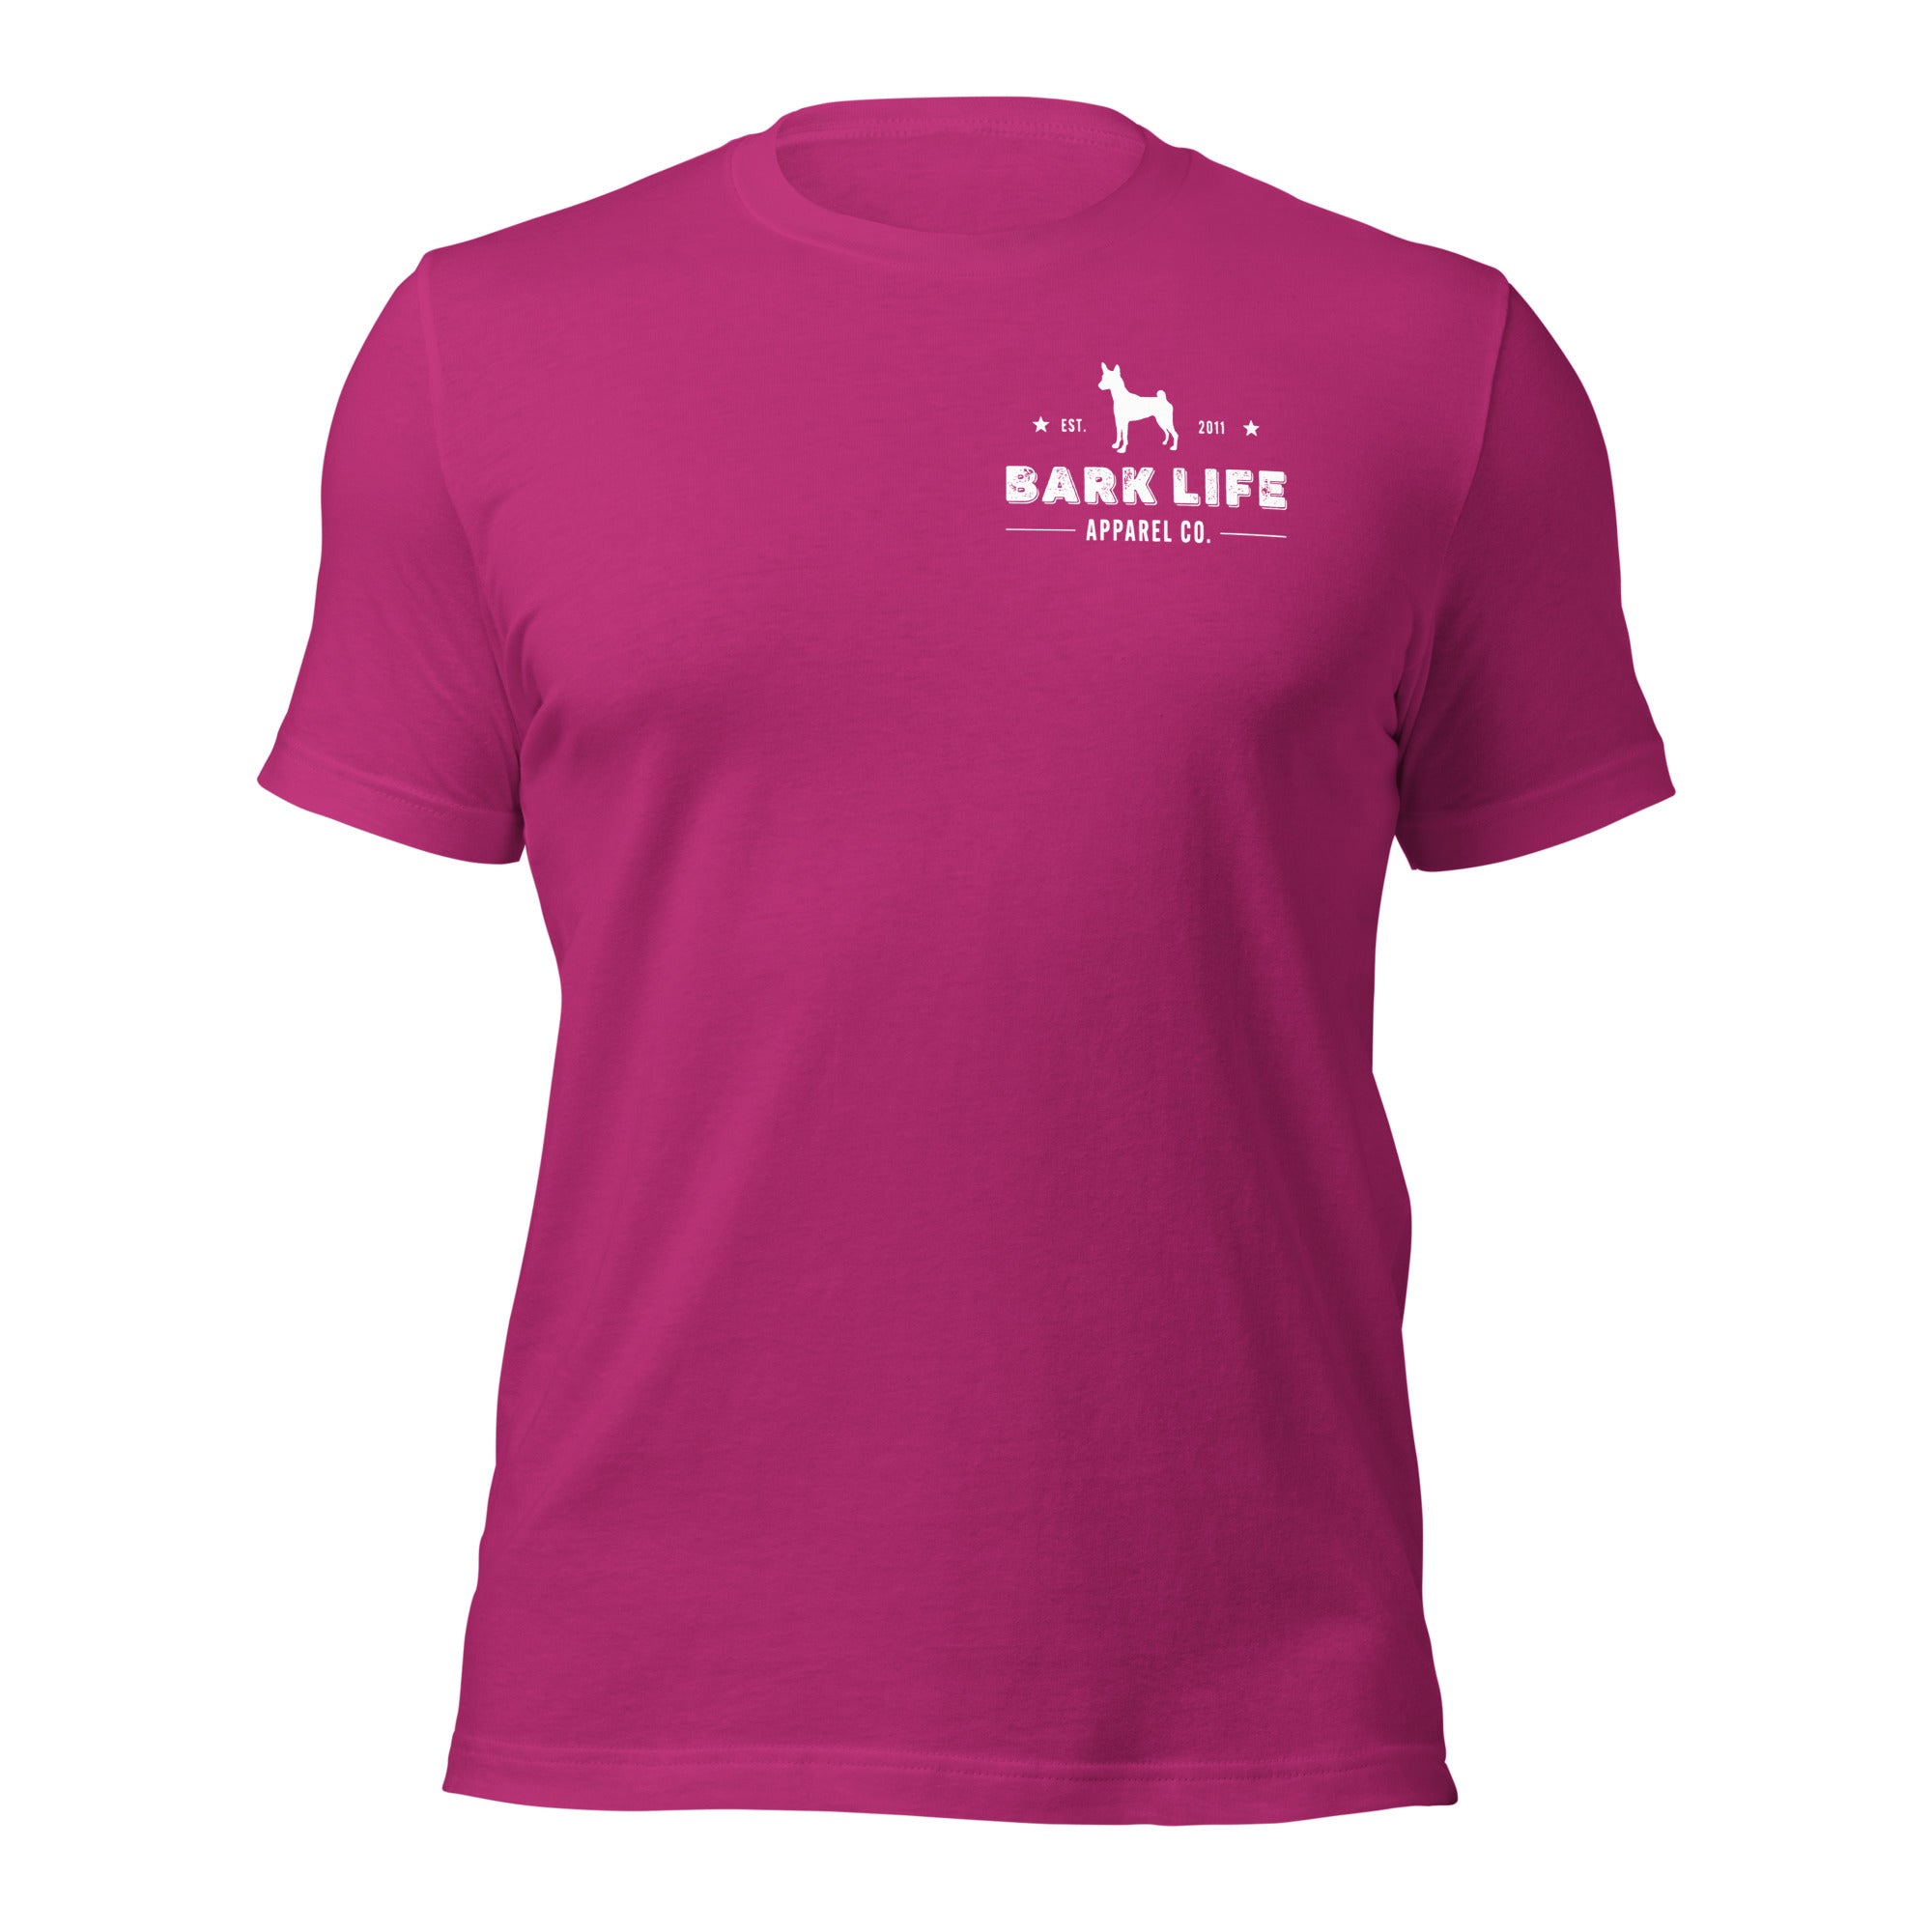 Basenji - Short Sleeve Cotton Tee  Shirt